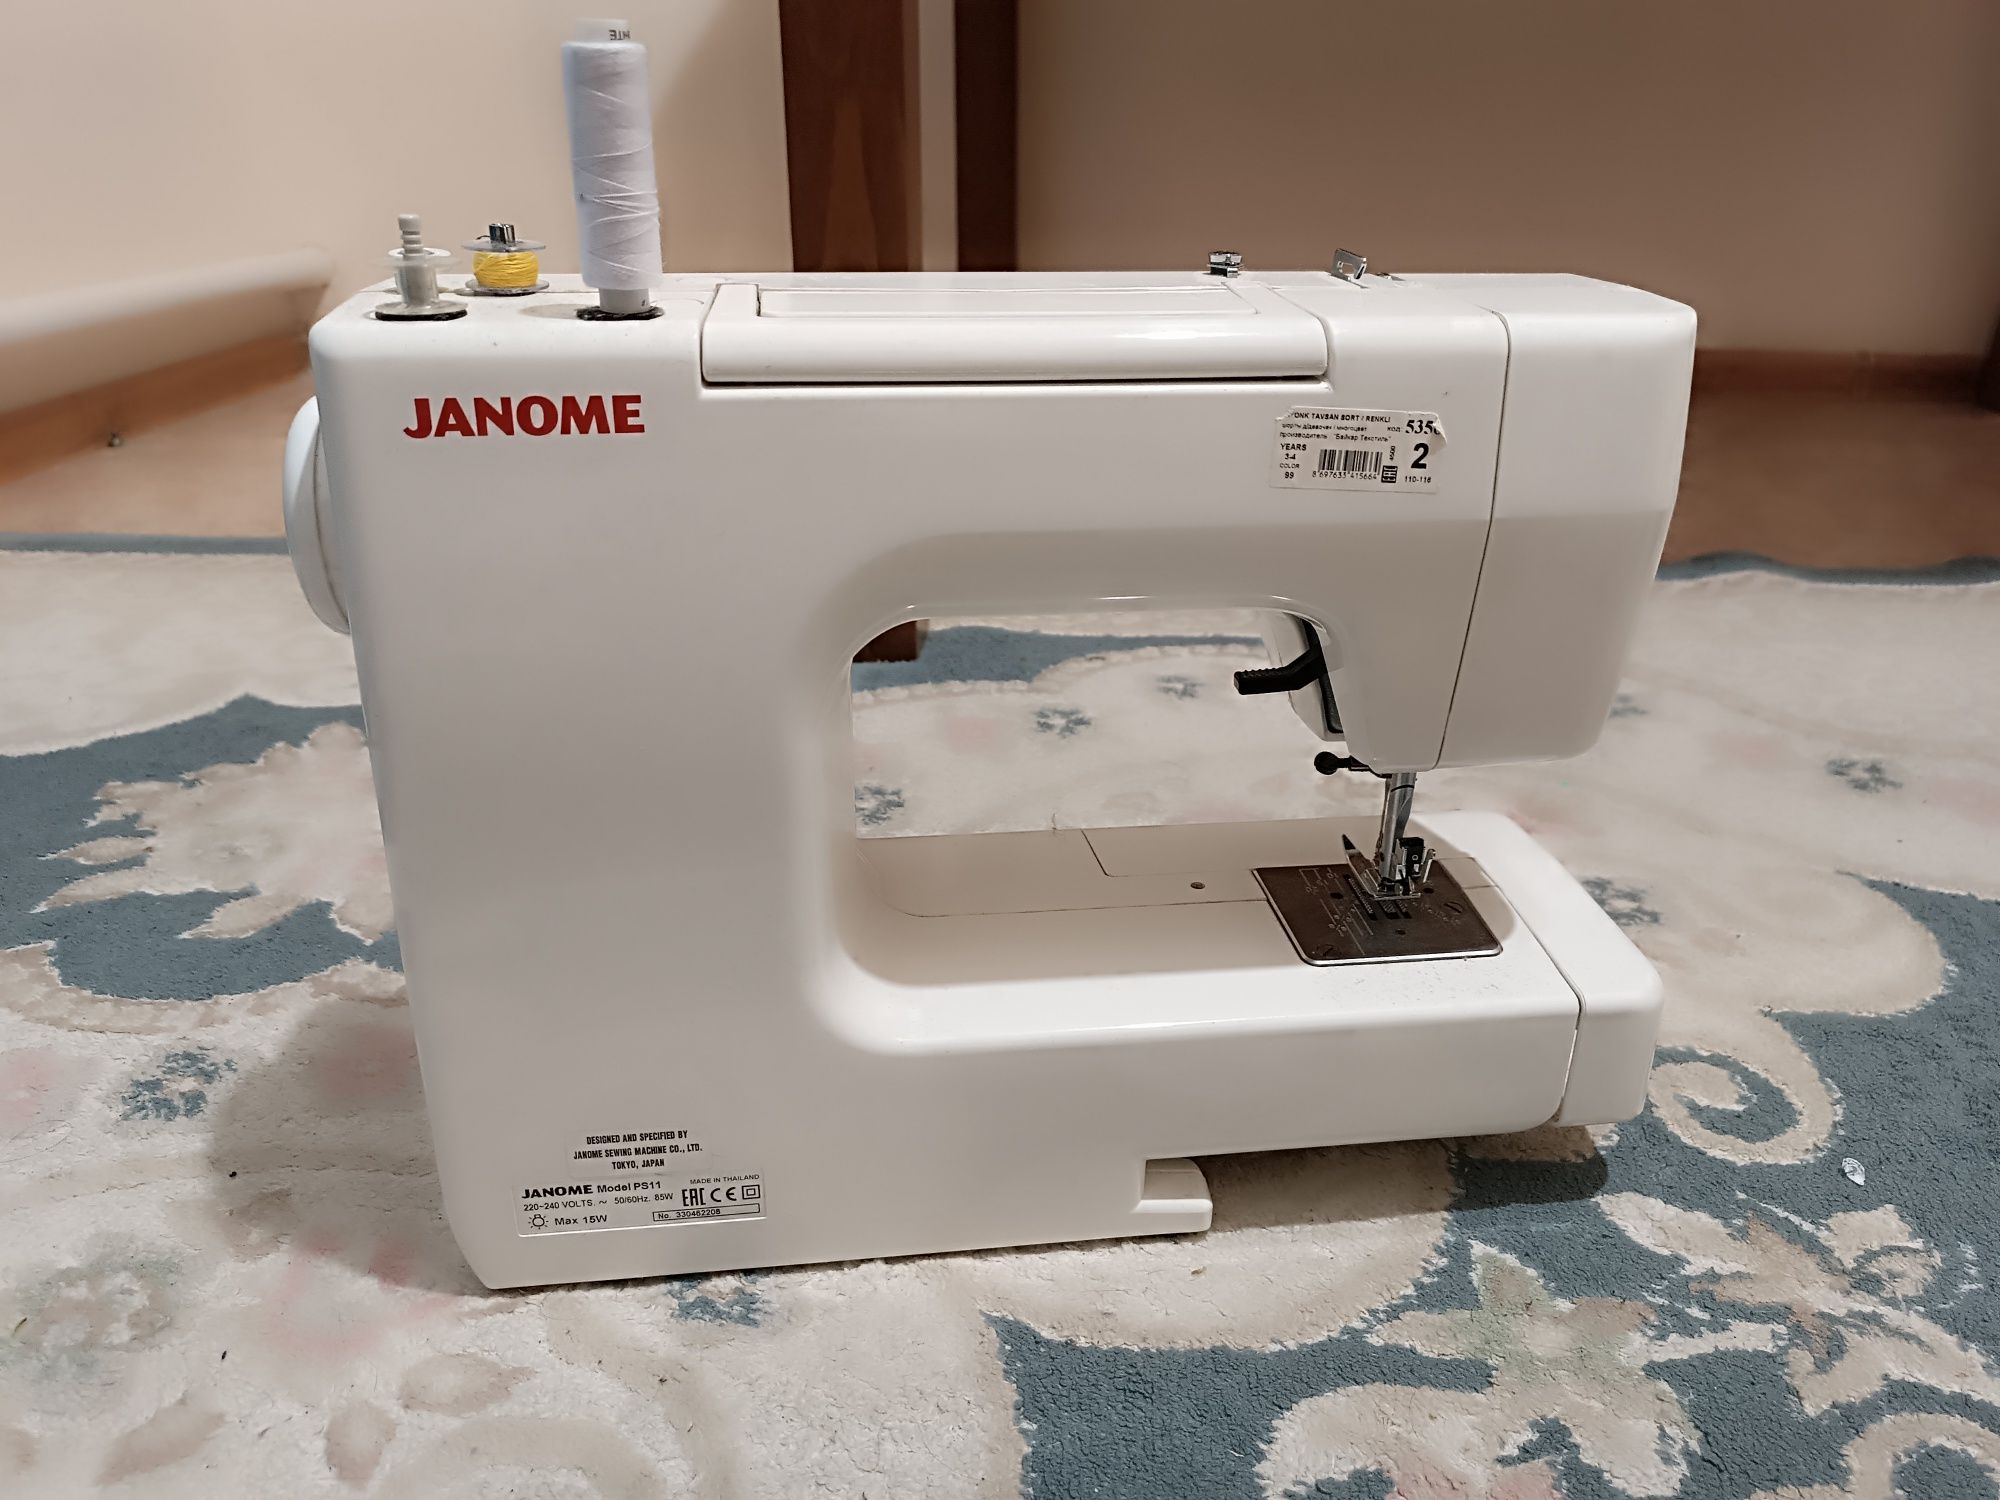 Janome швейная машина